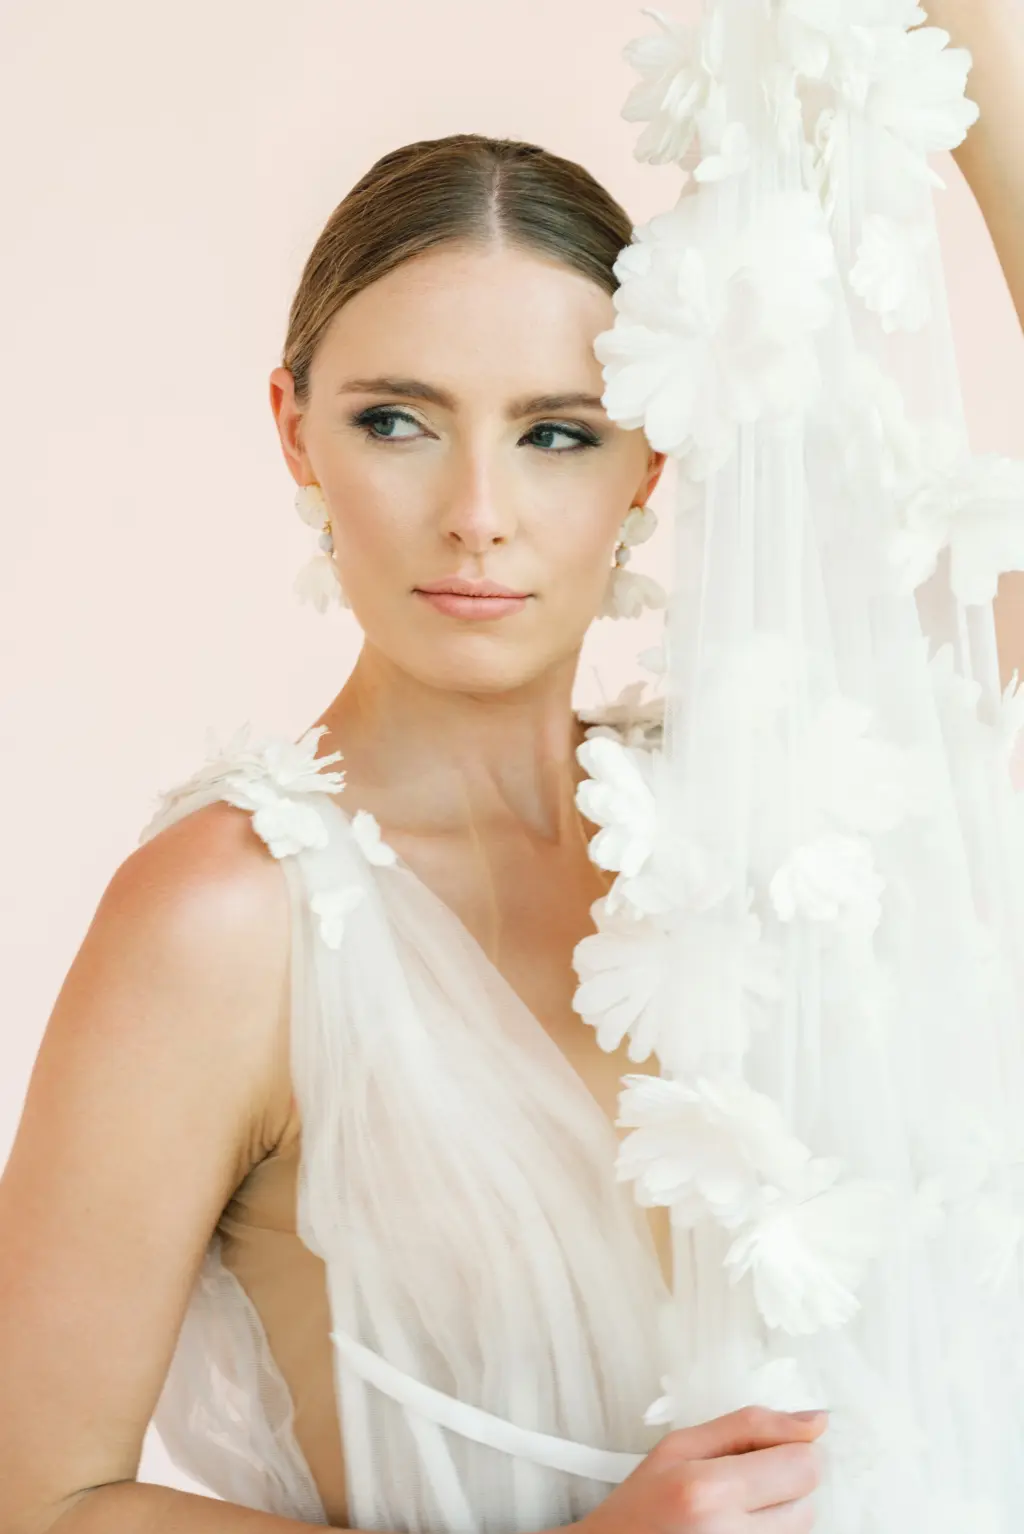 Bridal Wedding Chic Sleek Minimalist Hair and Makeup Ideas | Sarasota Photographer Amber Yonker Photography